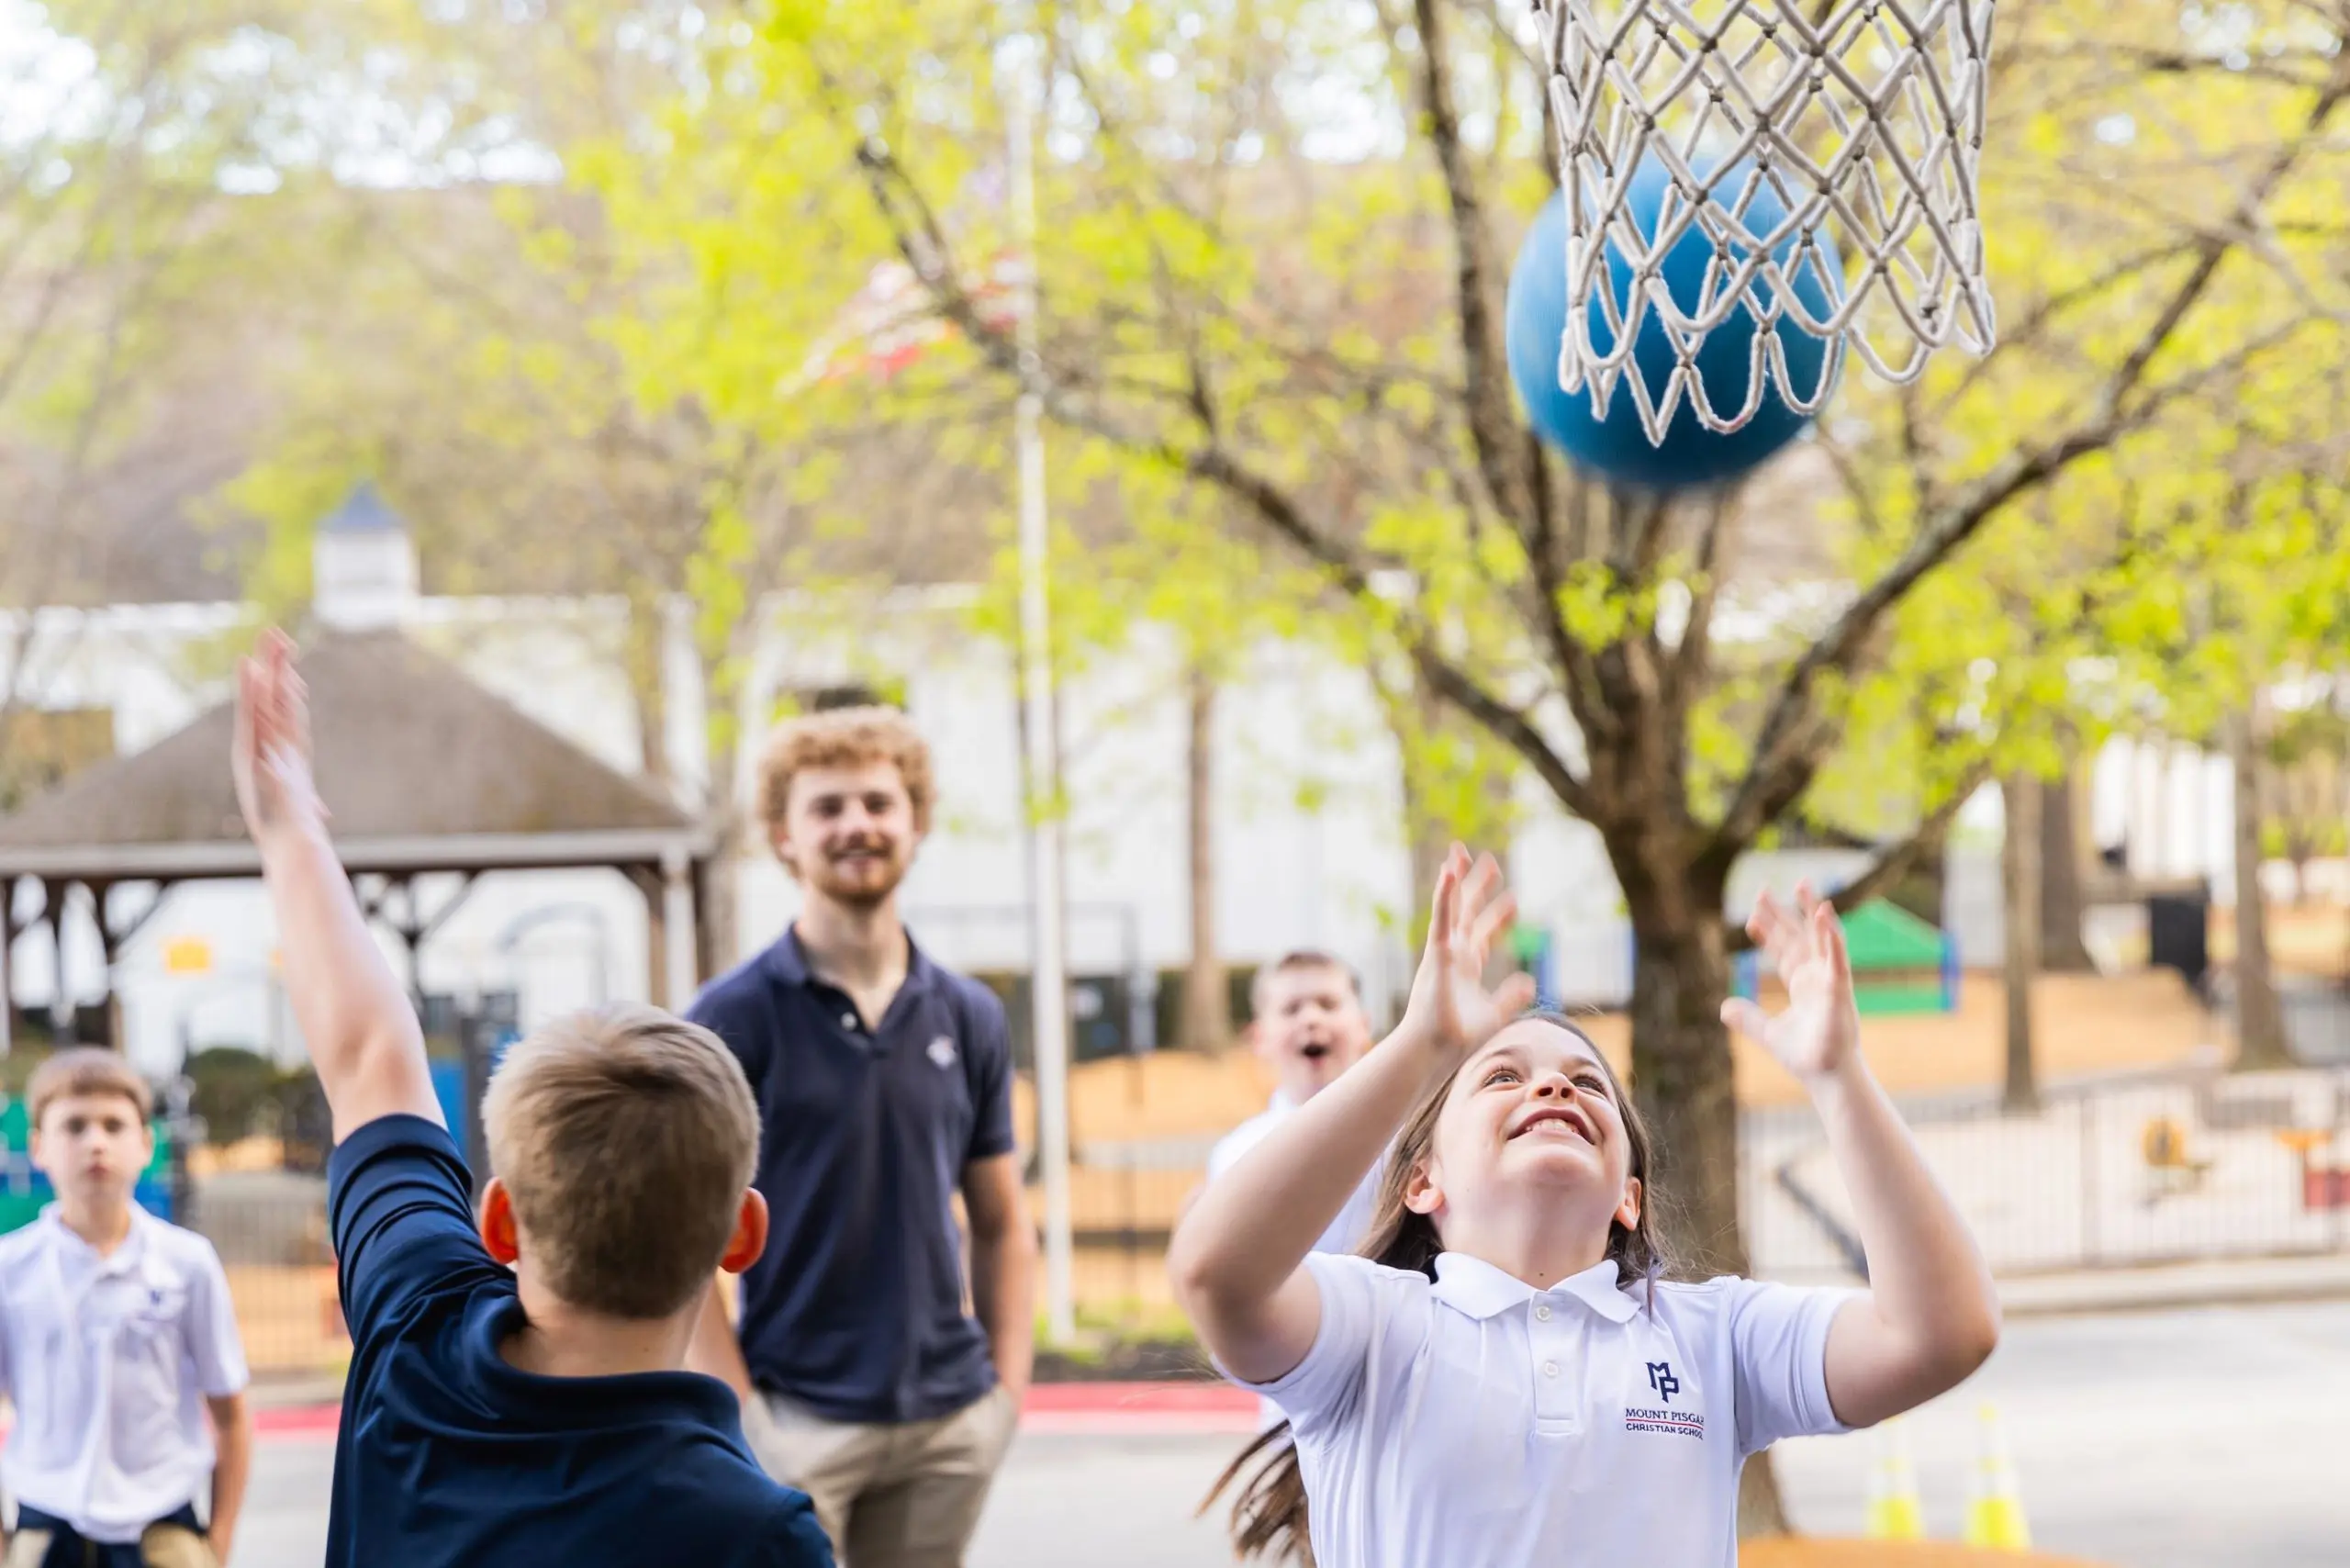 Students playing basketball